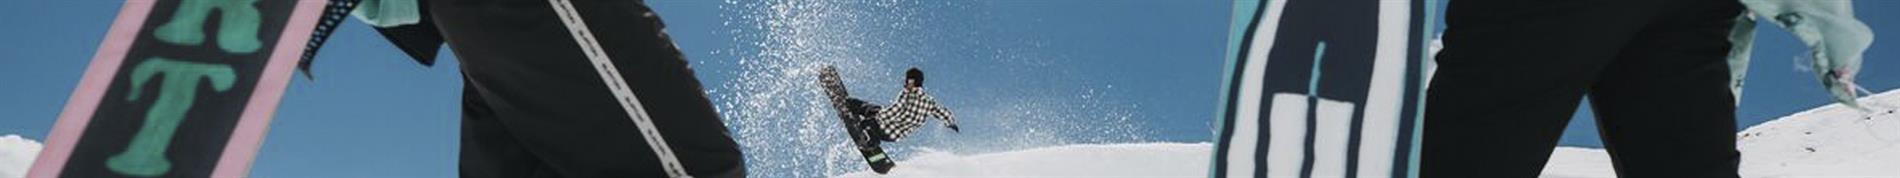 Salomon Snowboards High-Performance Snowboards for Kids 